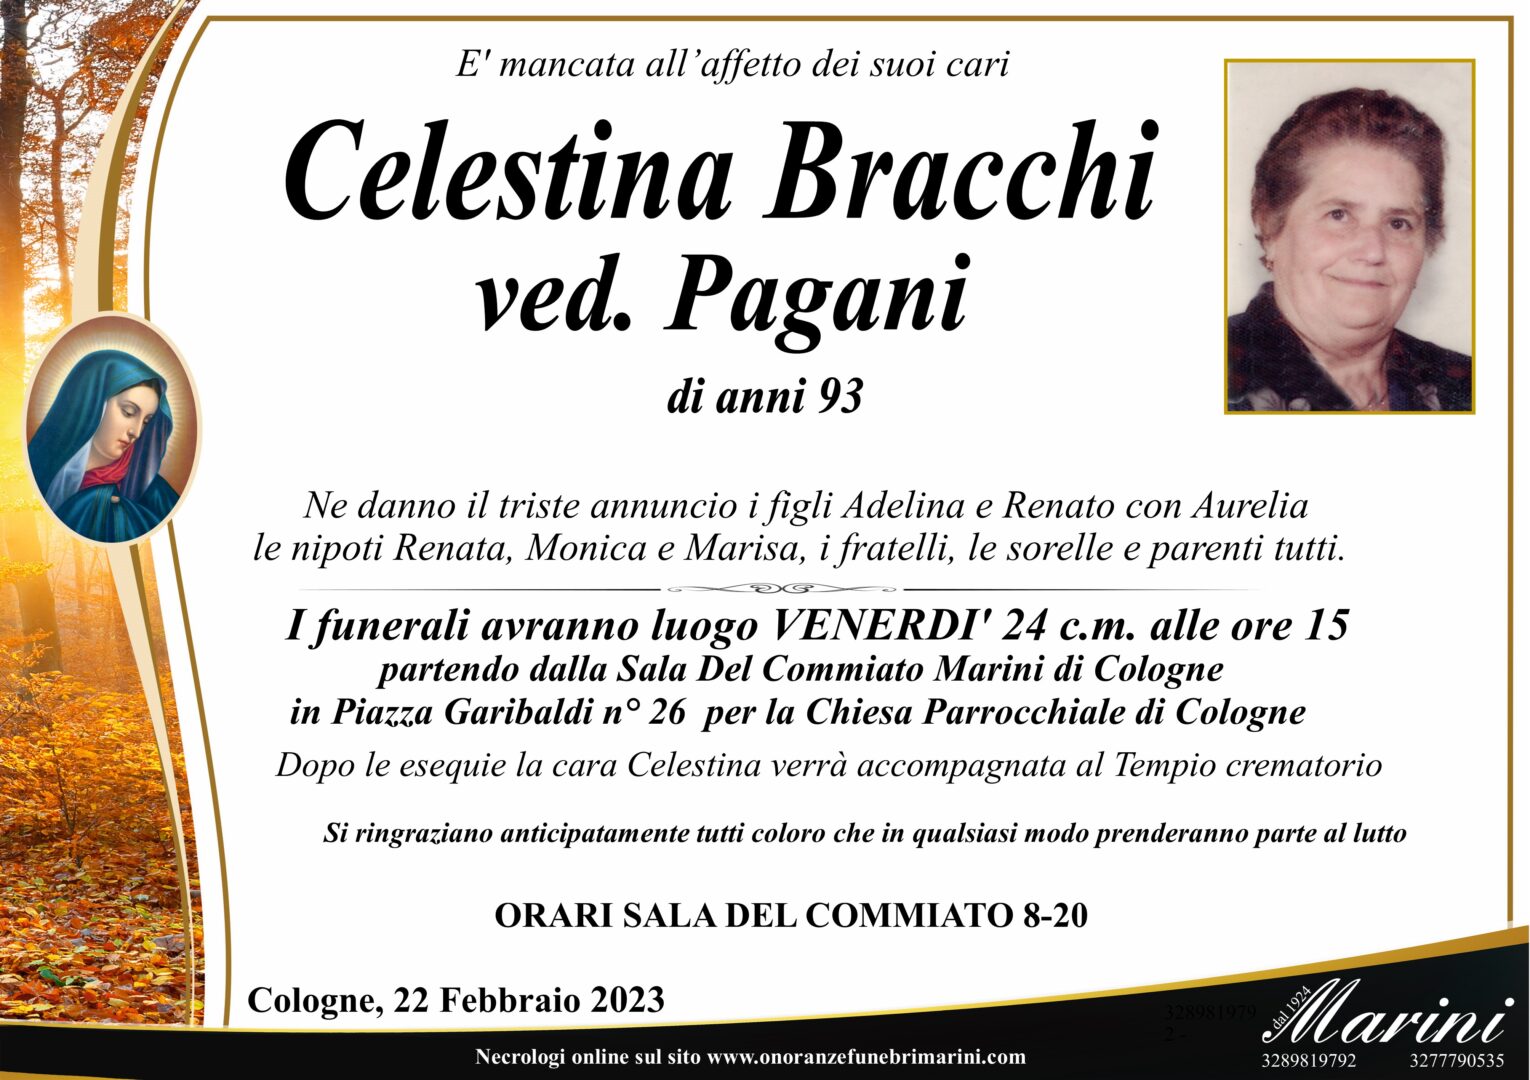 Celestina Bracchi ved. Pagani